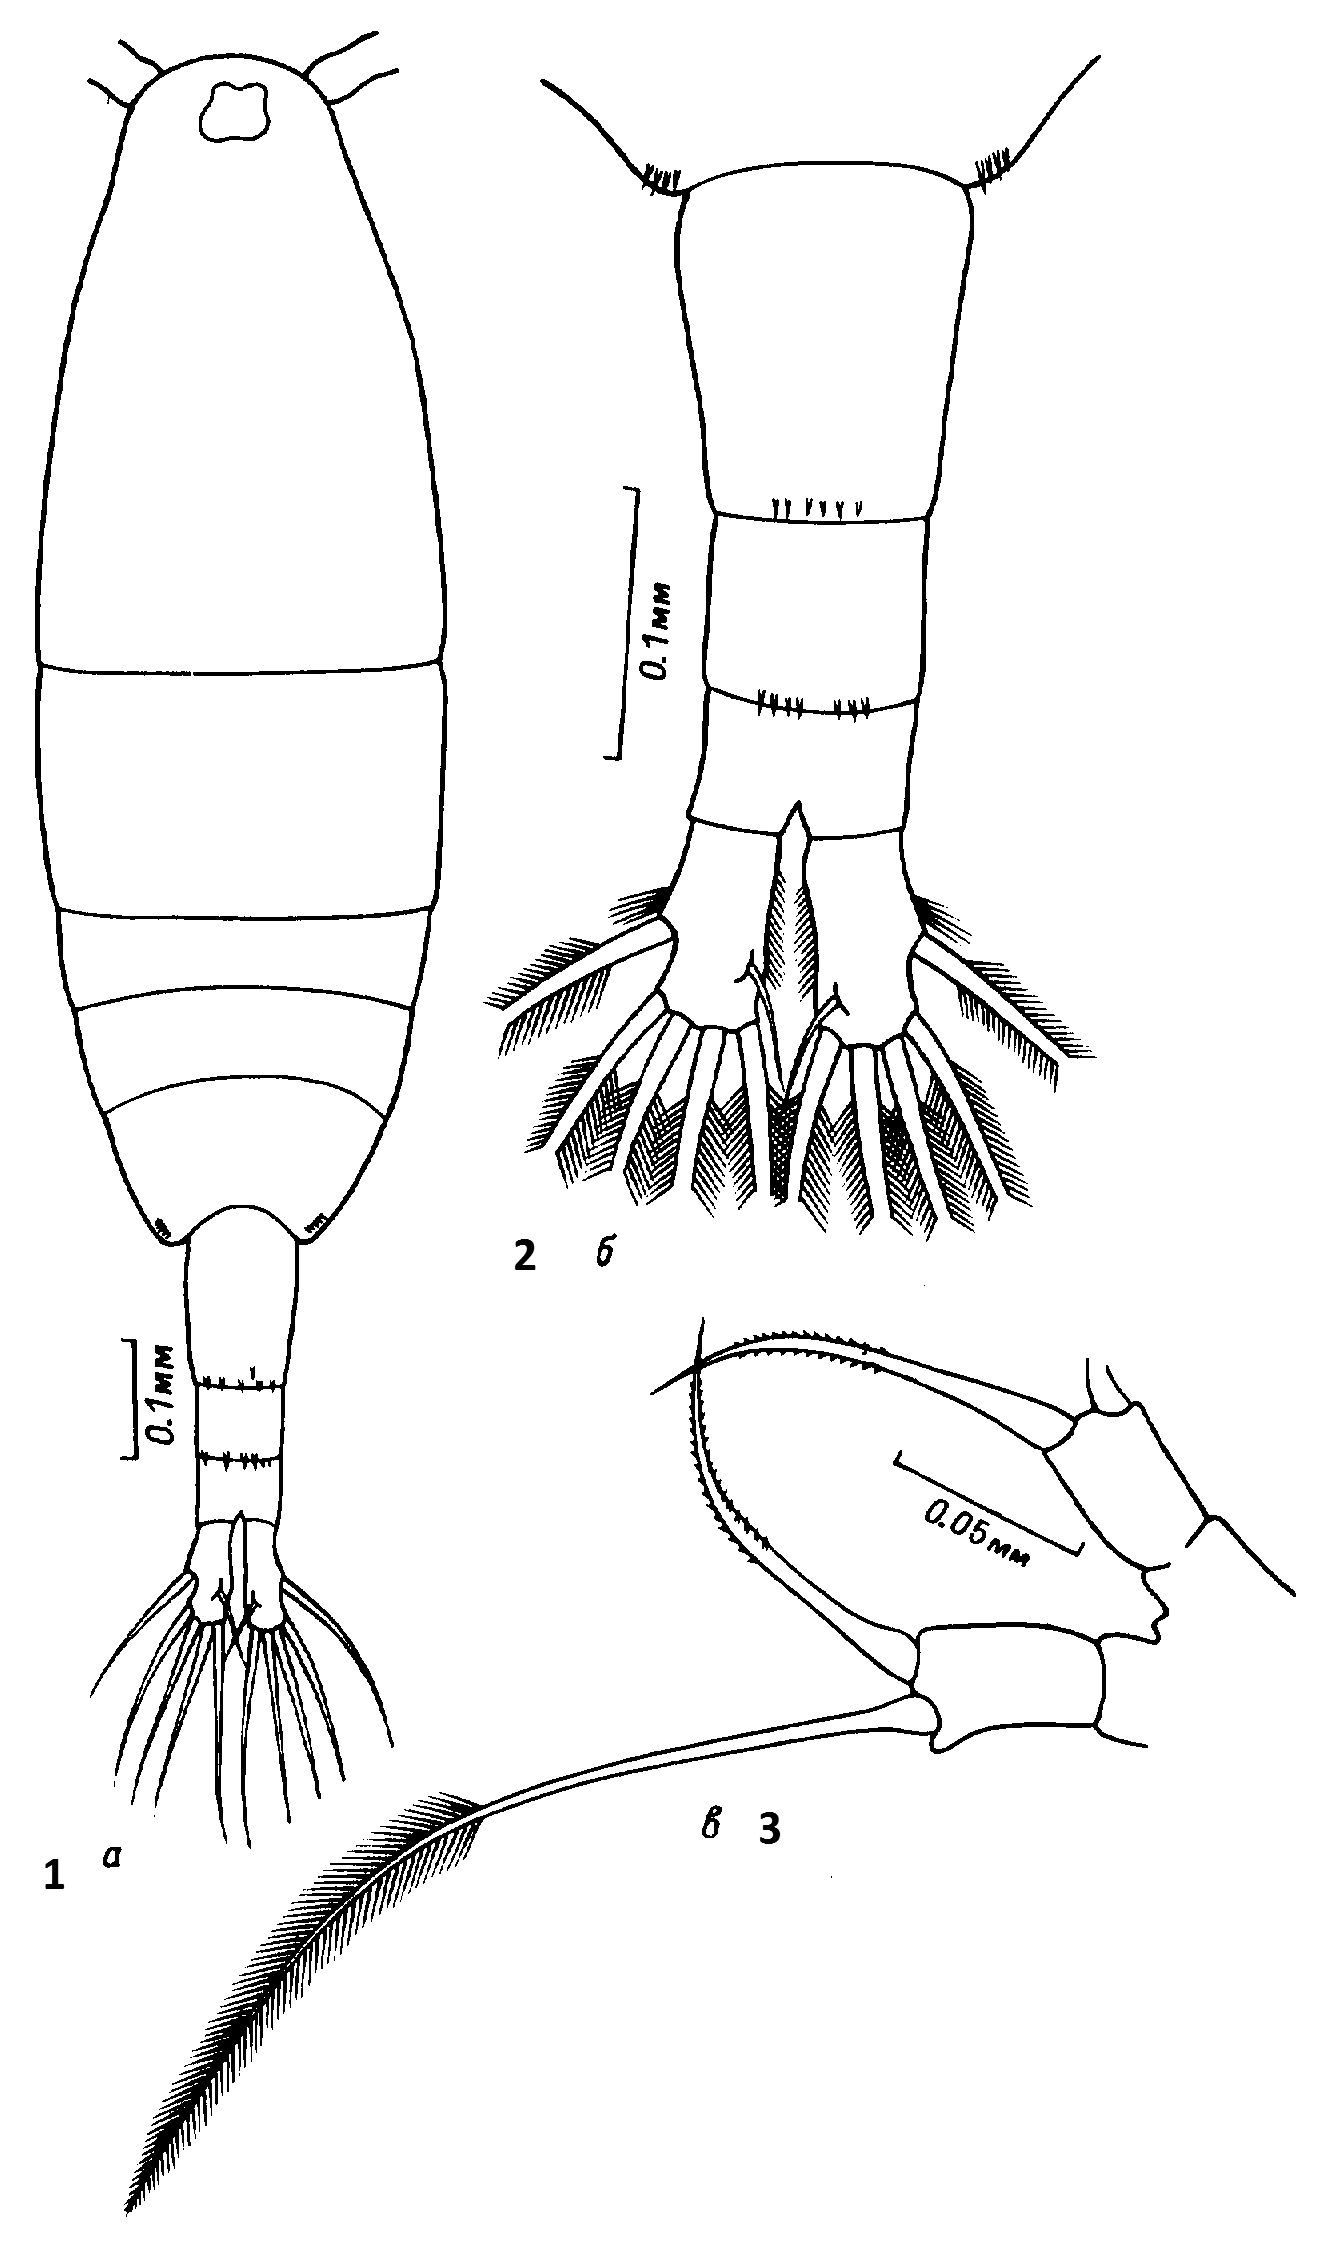 Species Acartia (Acanthacartia) steueri - Plate 6 of morphological figures